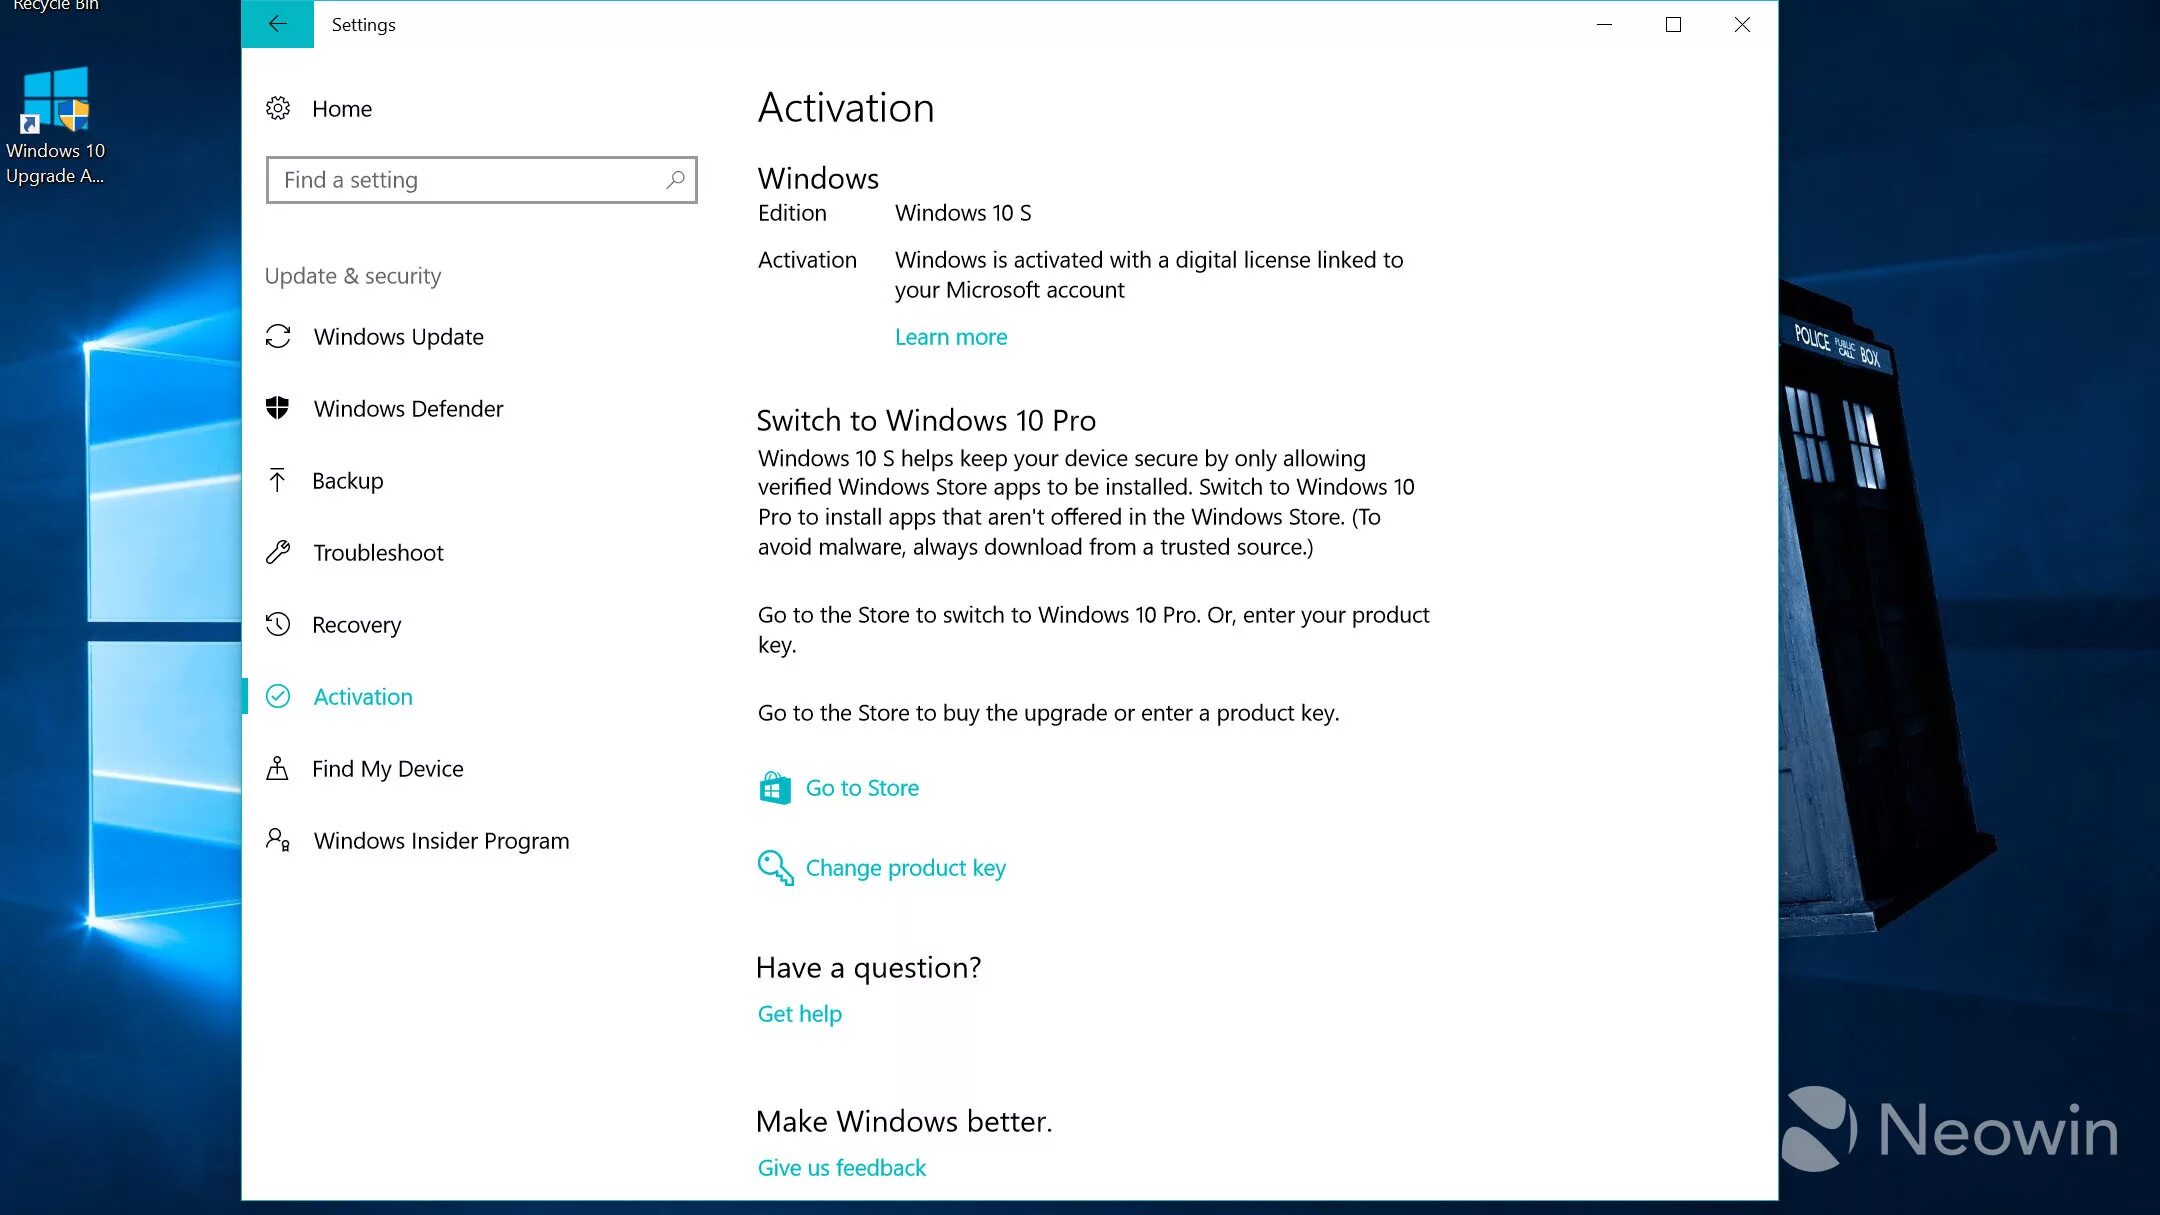 Windows install apps. Активация Windows 10 Pro. Поверх всех окон Windows 10. Активация Windows поверх окон. Windows Lisanslama.